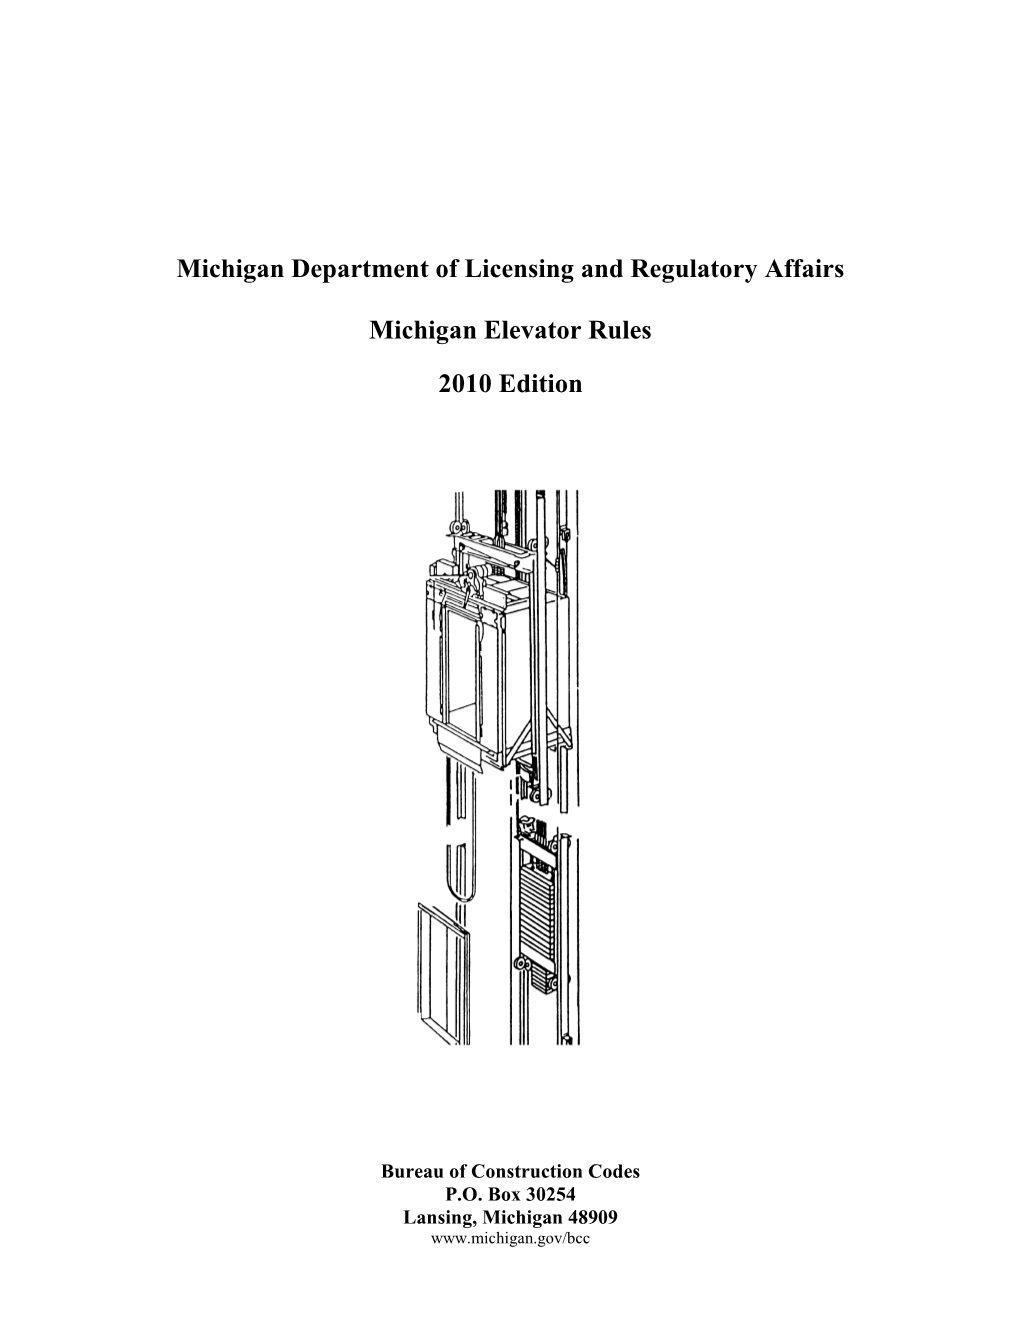 Michigan Department of Licensing and Regulatory Affairs Michigan Elevator Rules 2010 Edition